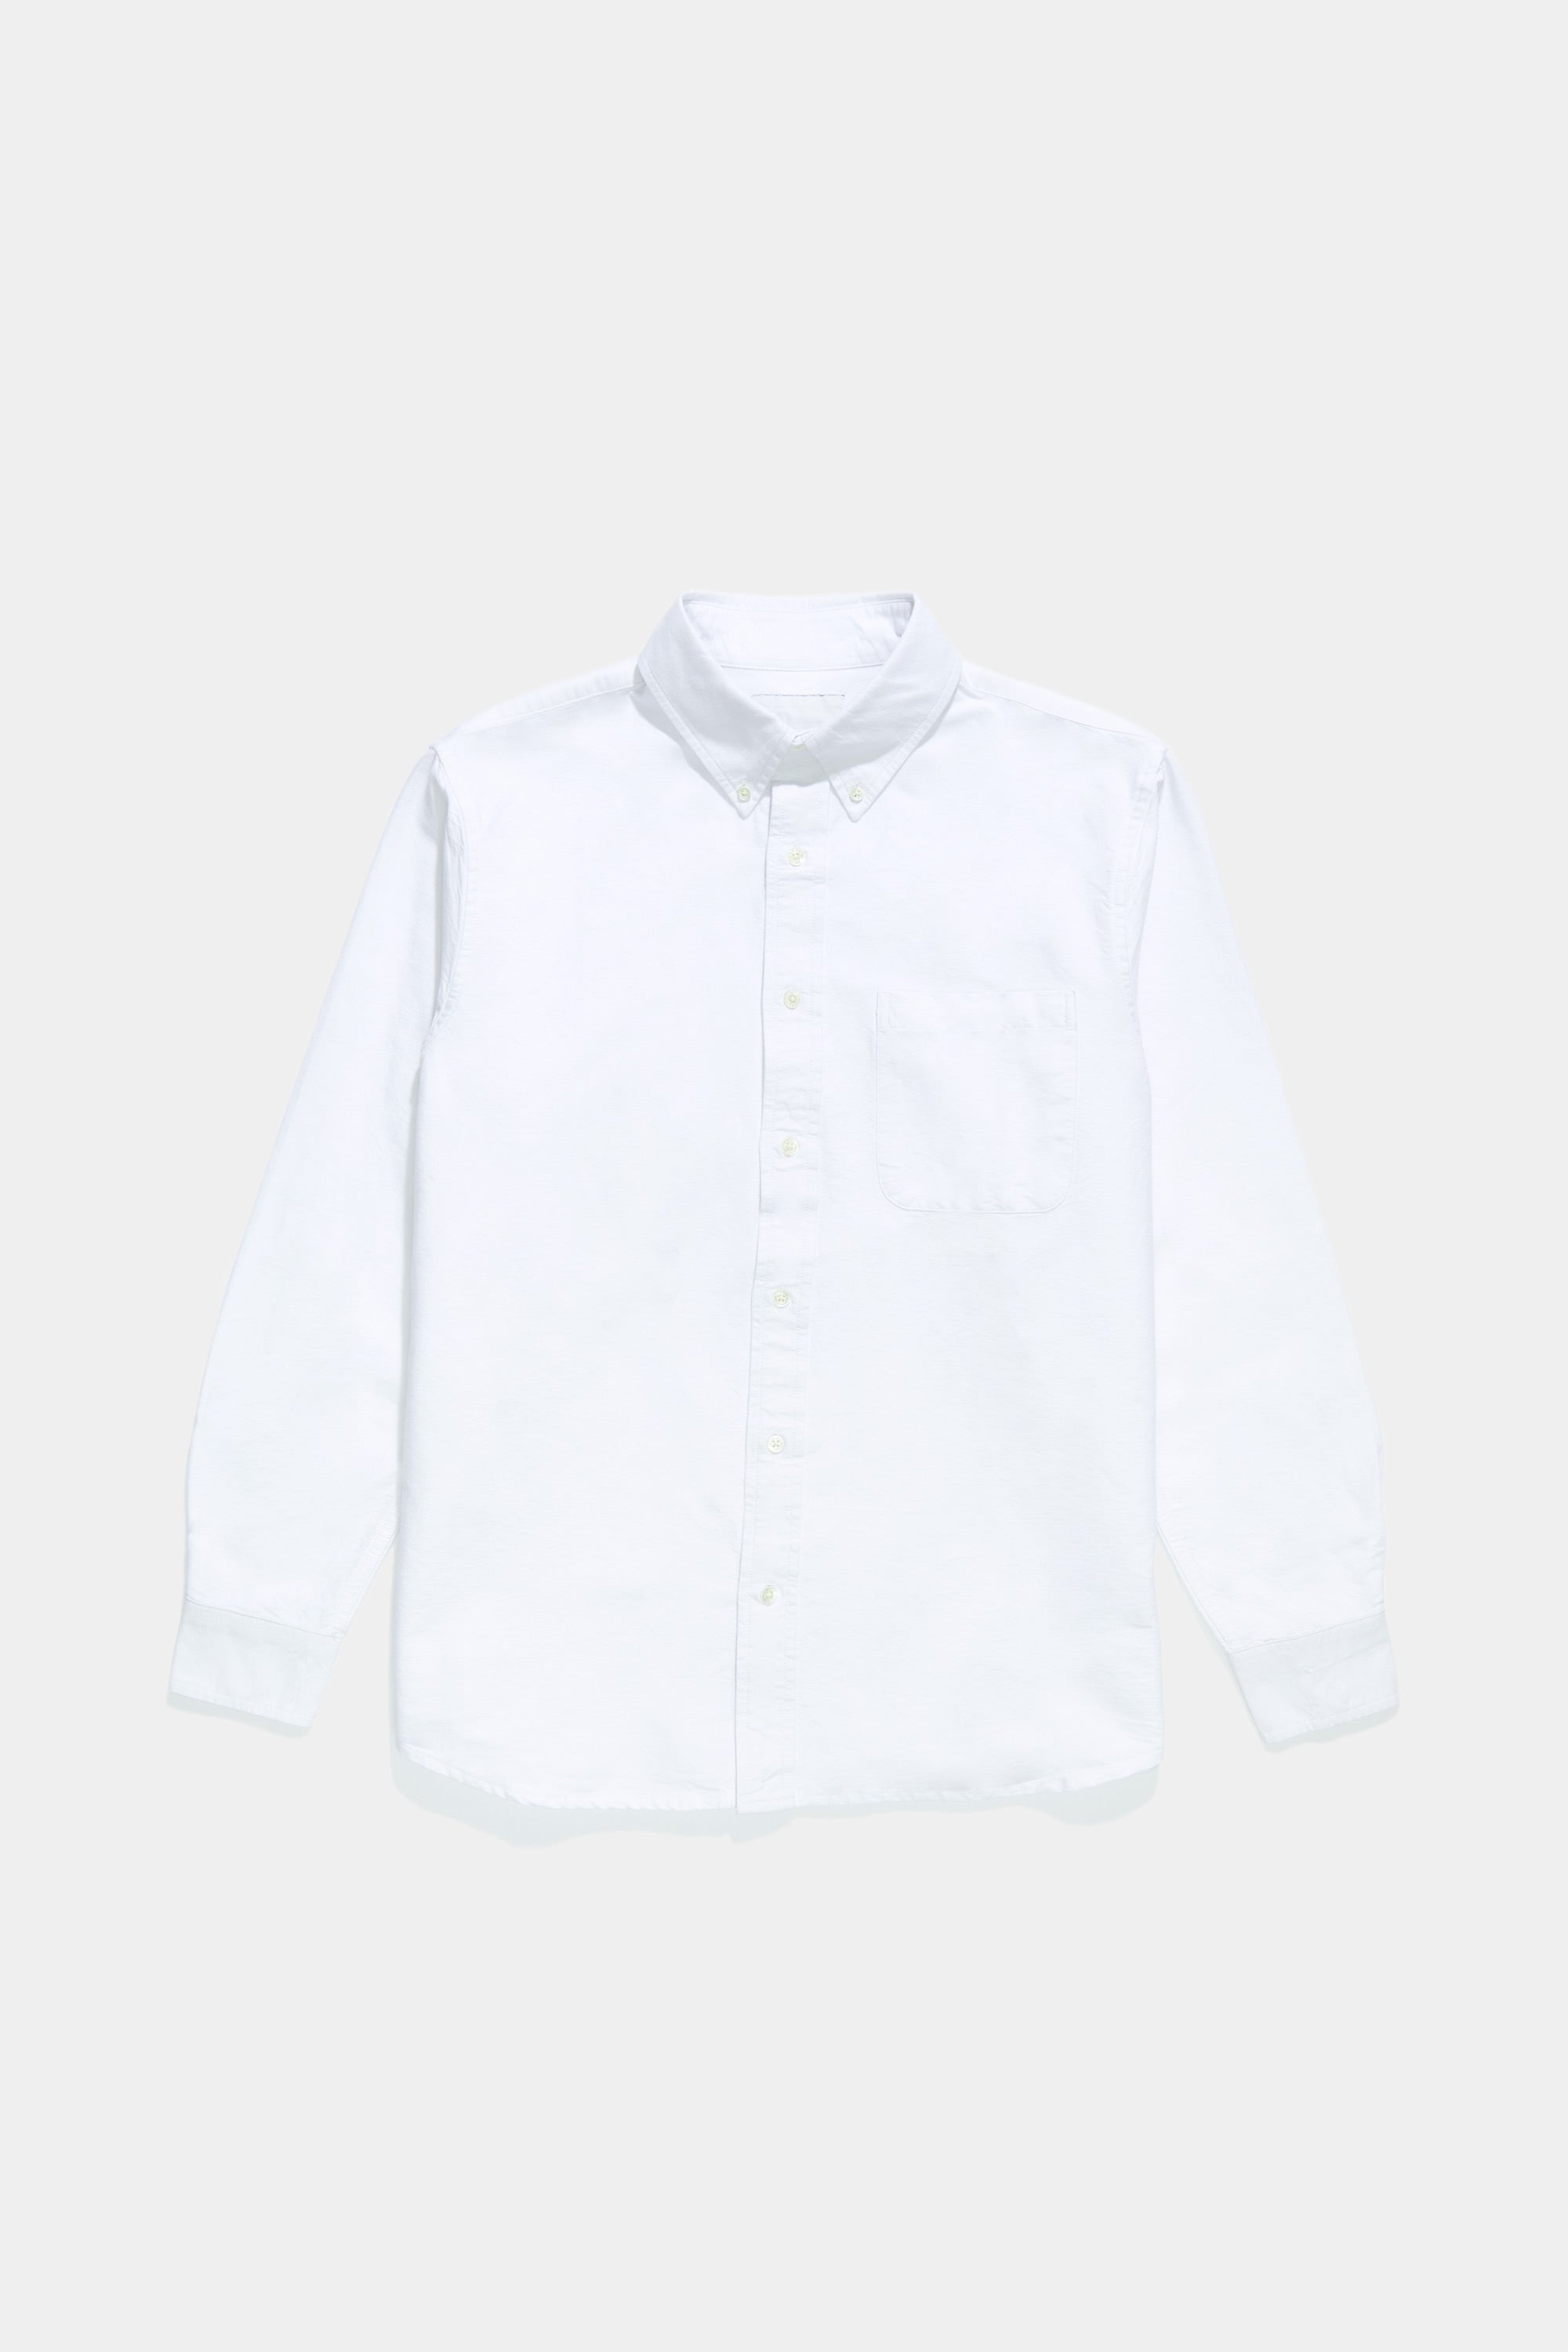 Premium Oxford Button Down - White / Adsum